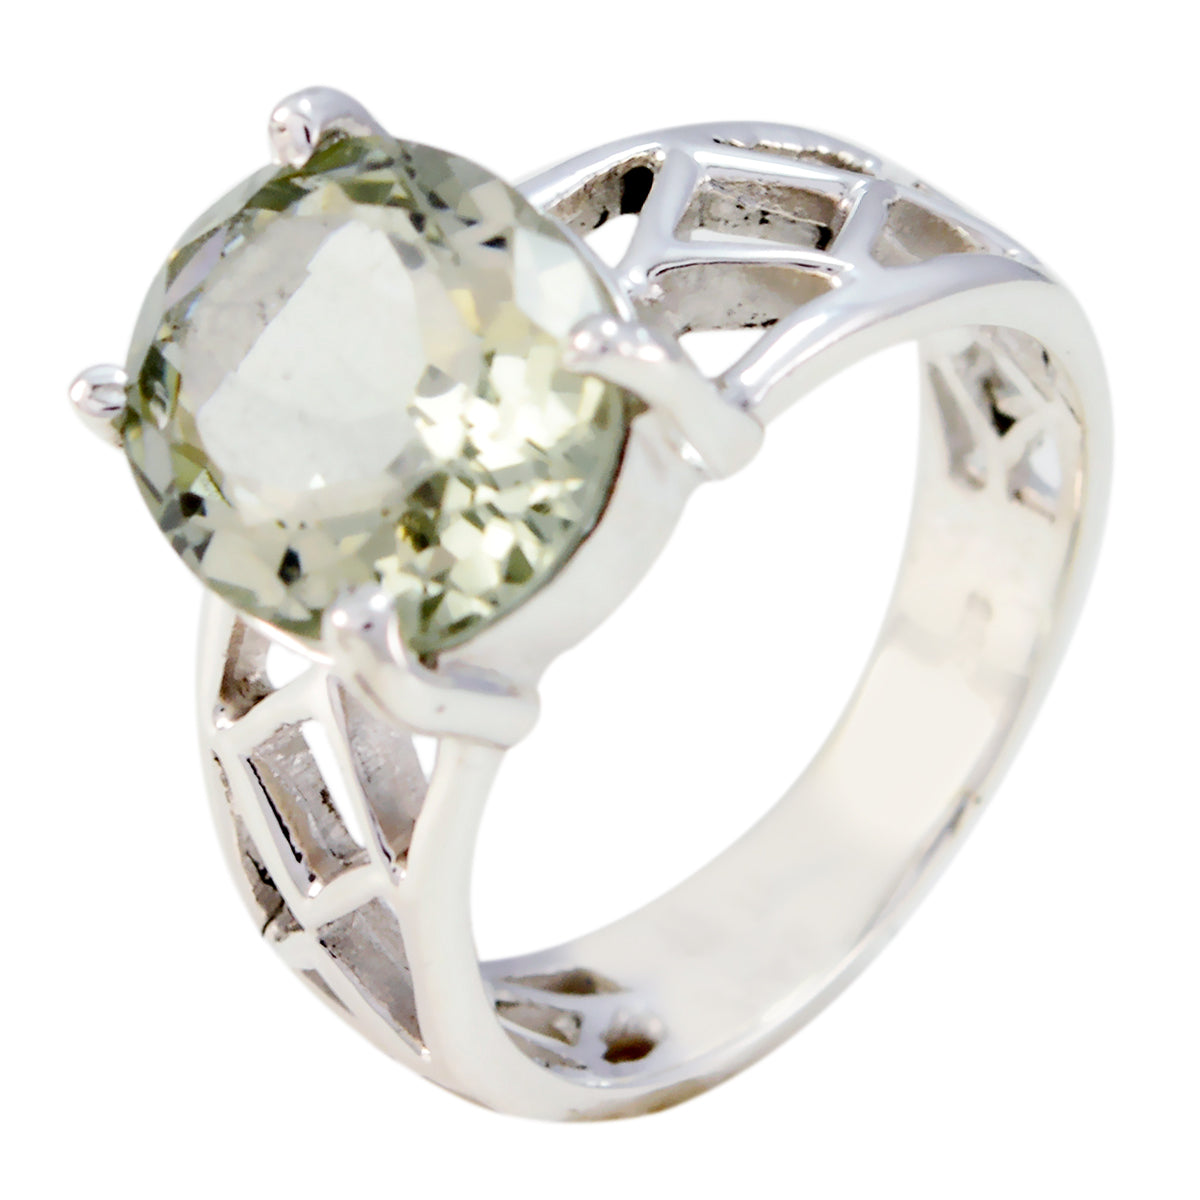 Refined Gem Green Amethyst 925 Sterling Silver Ring Green Jewelry